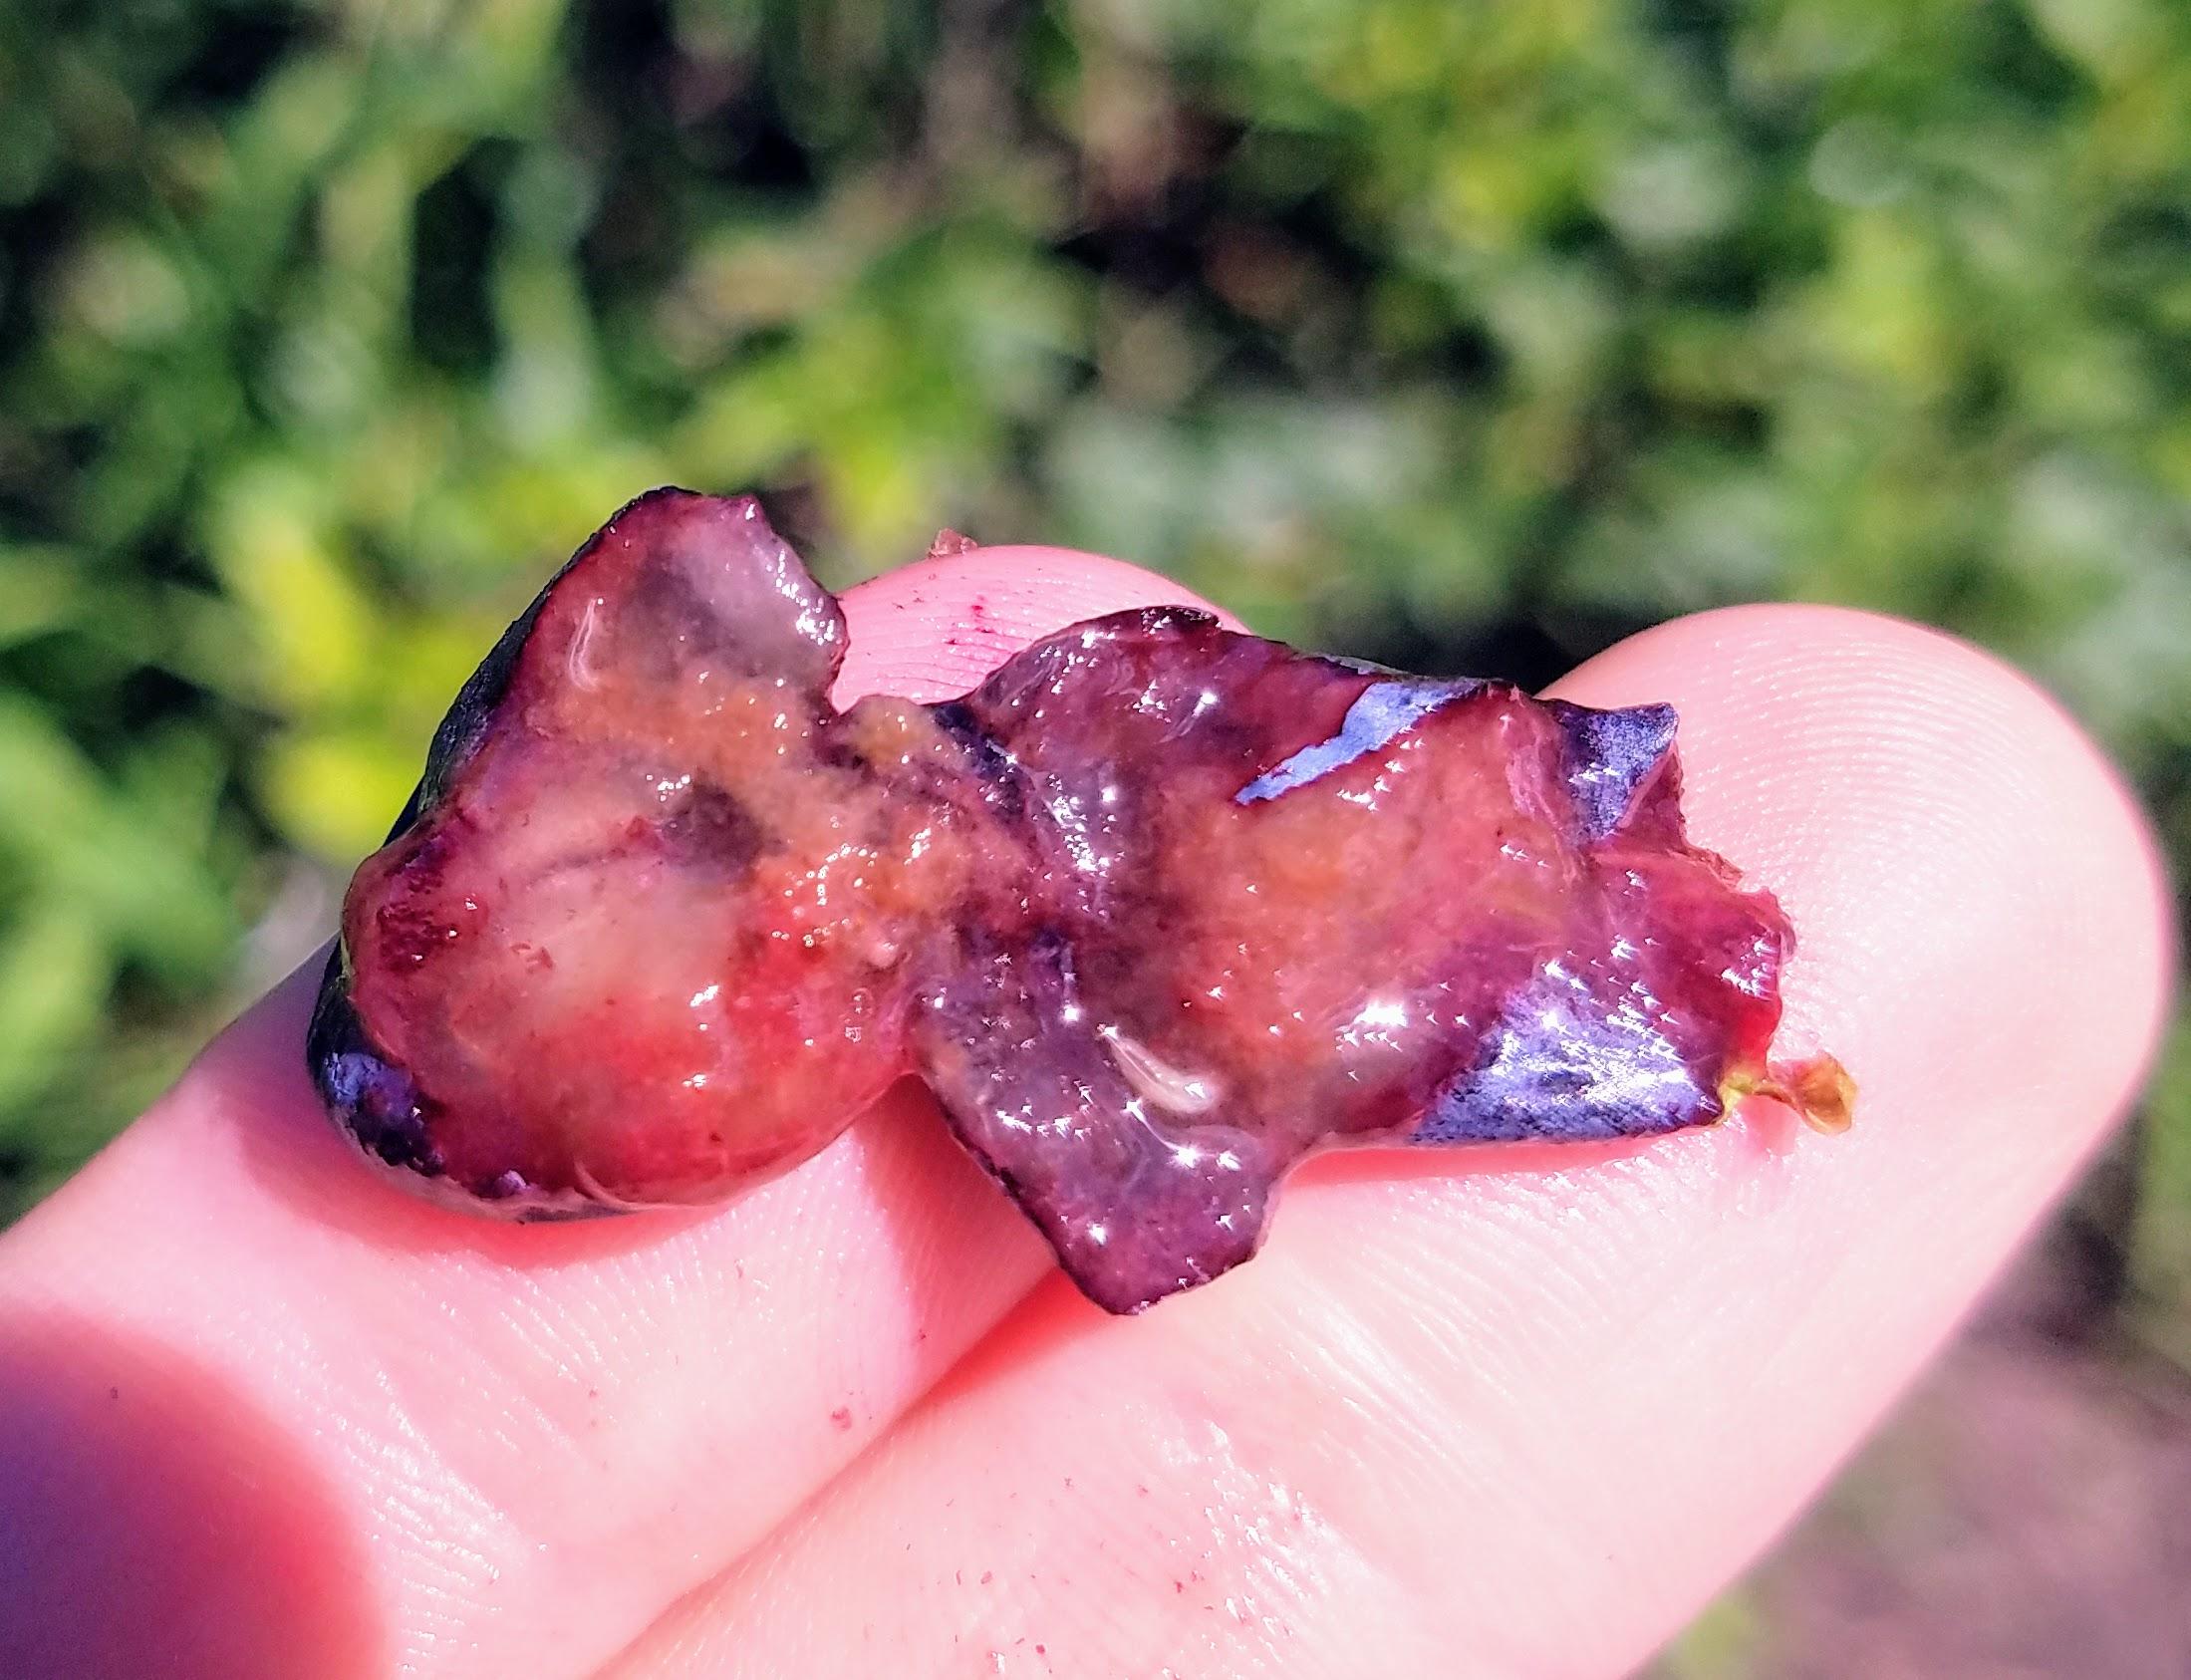 SWD larvae inside blueberry fruit